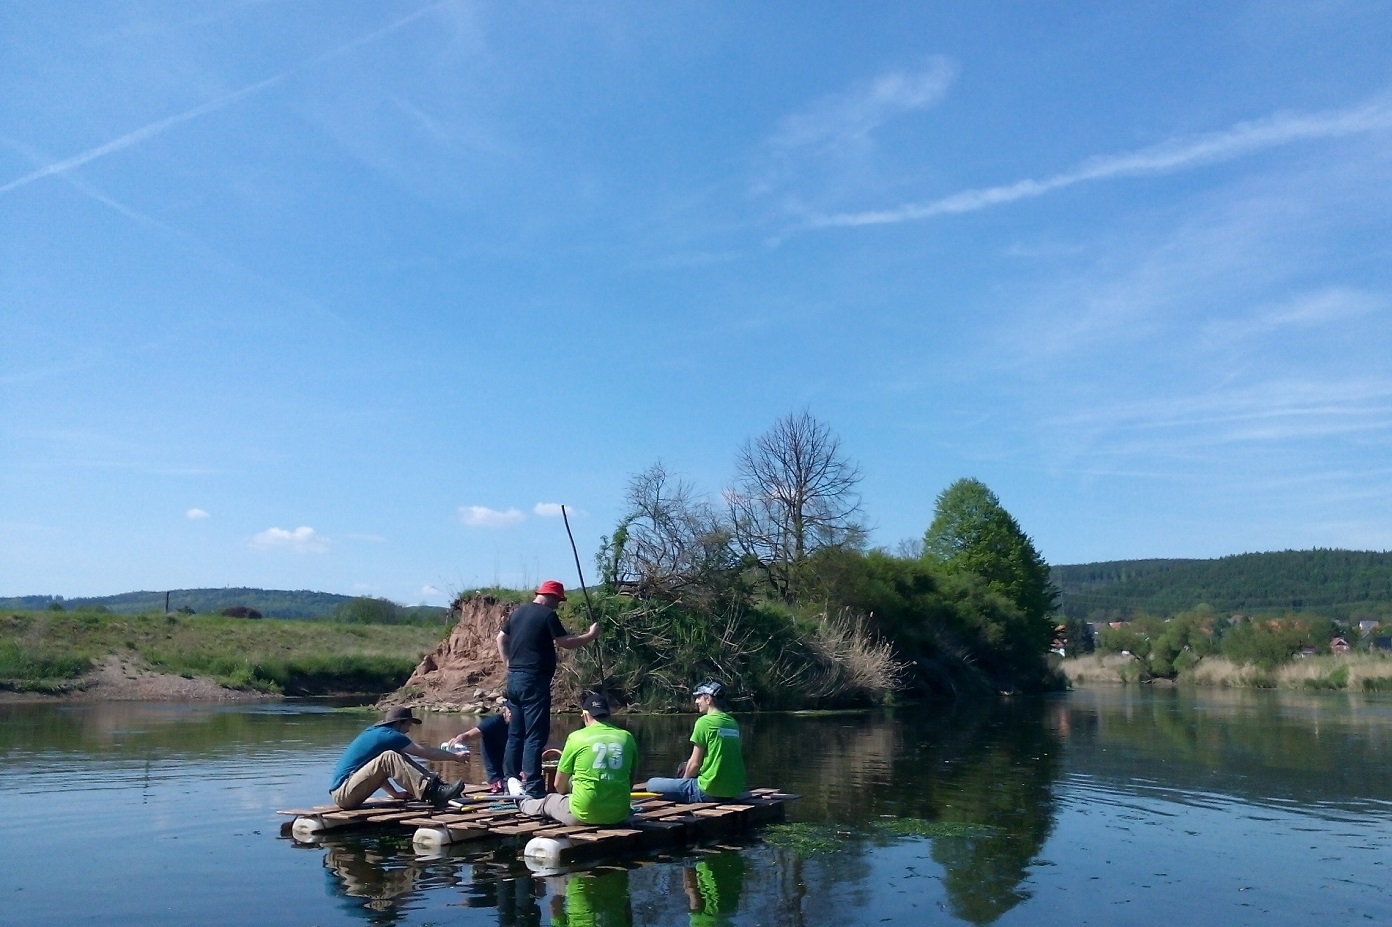 Inpsyder enjoying team retreat on the river